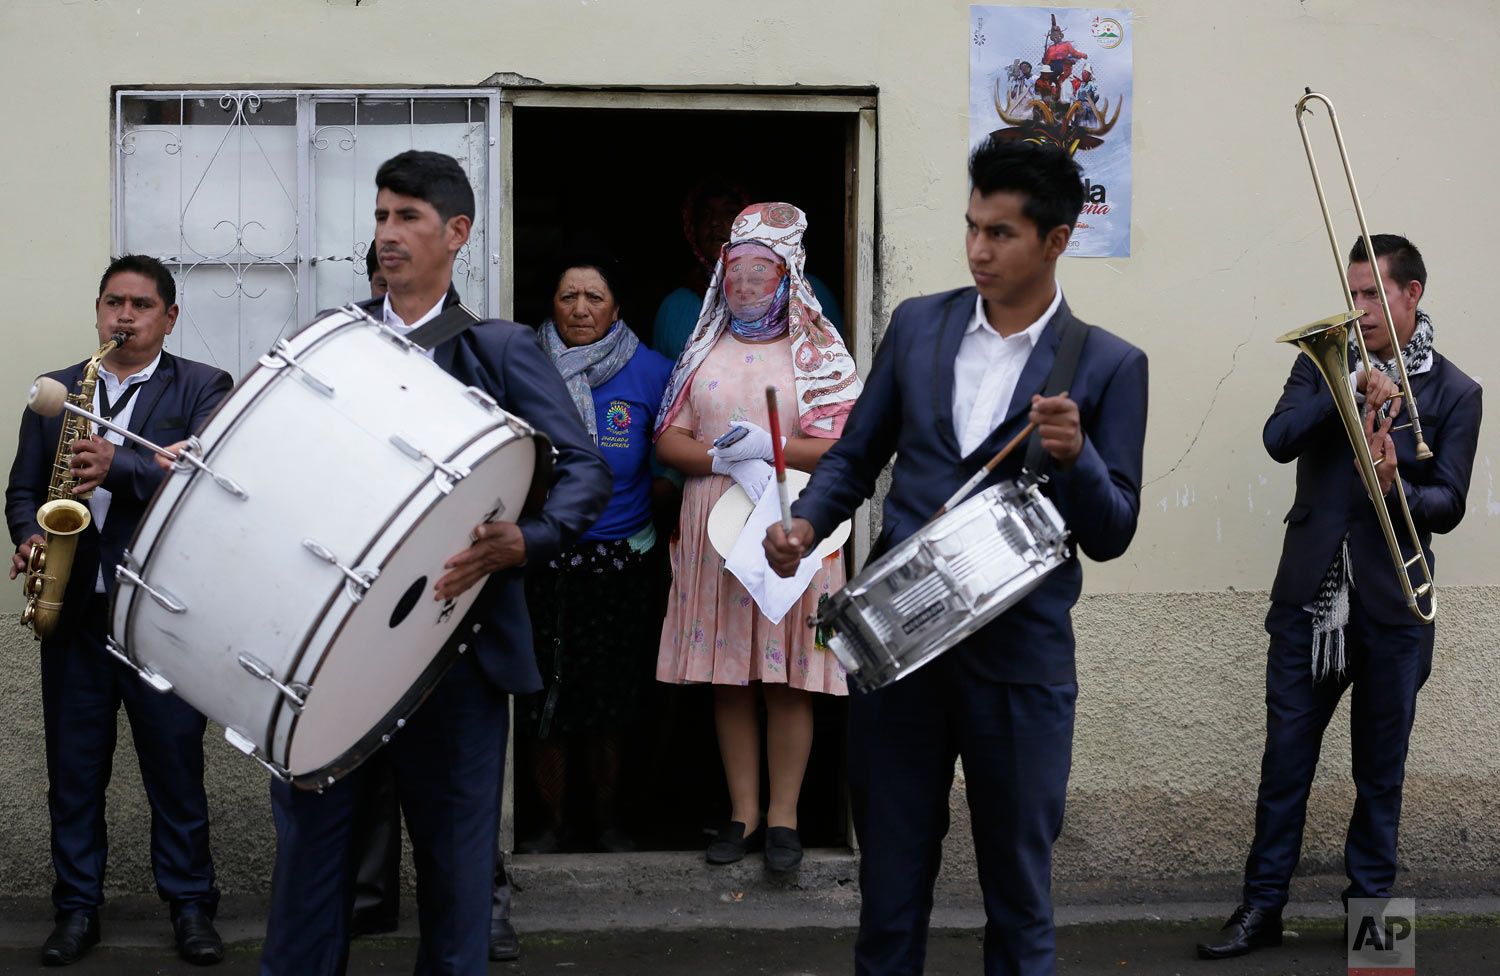  Musicians and a reveler in costume get ready to participate in the feast of "La Diablada" in Pillaro, Ecuador, Jan. 4, 2019. (AP Photo/Dolores Ochoa) 